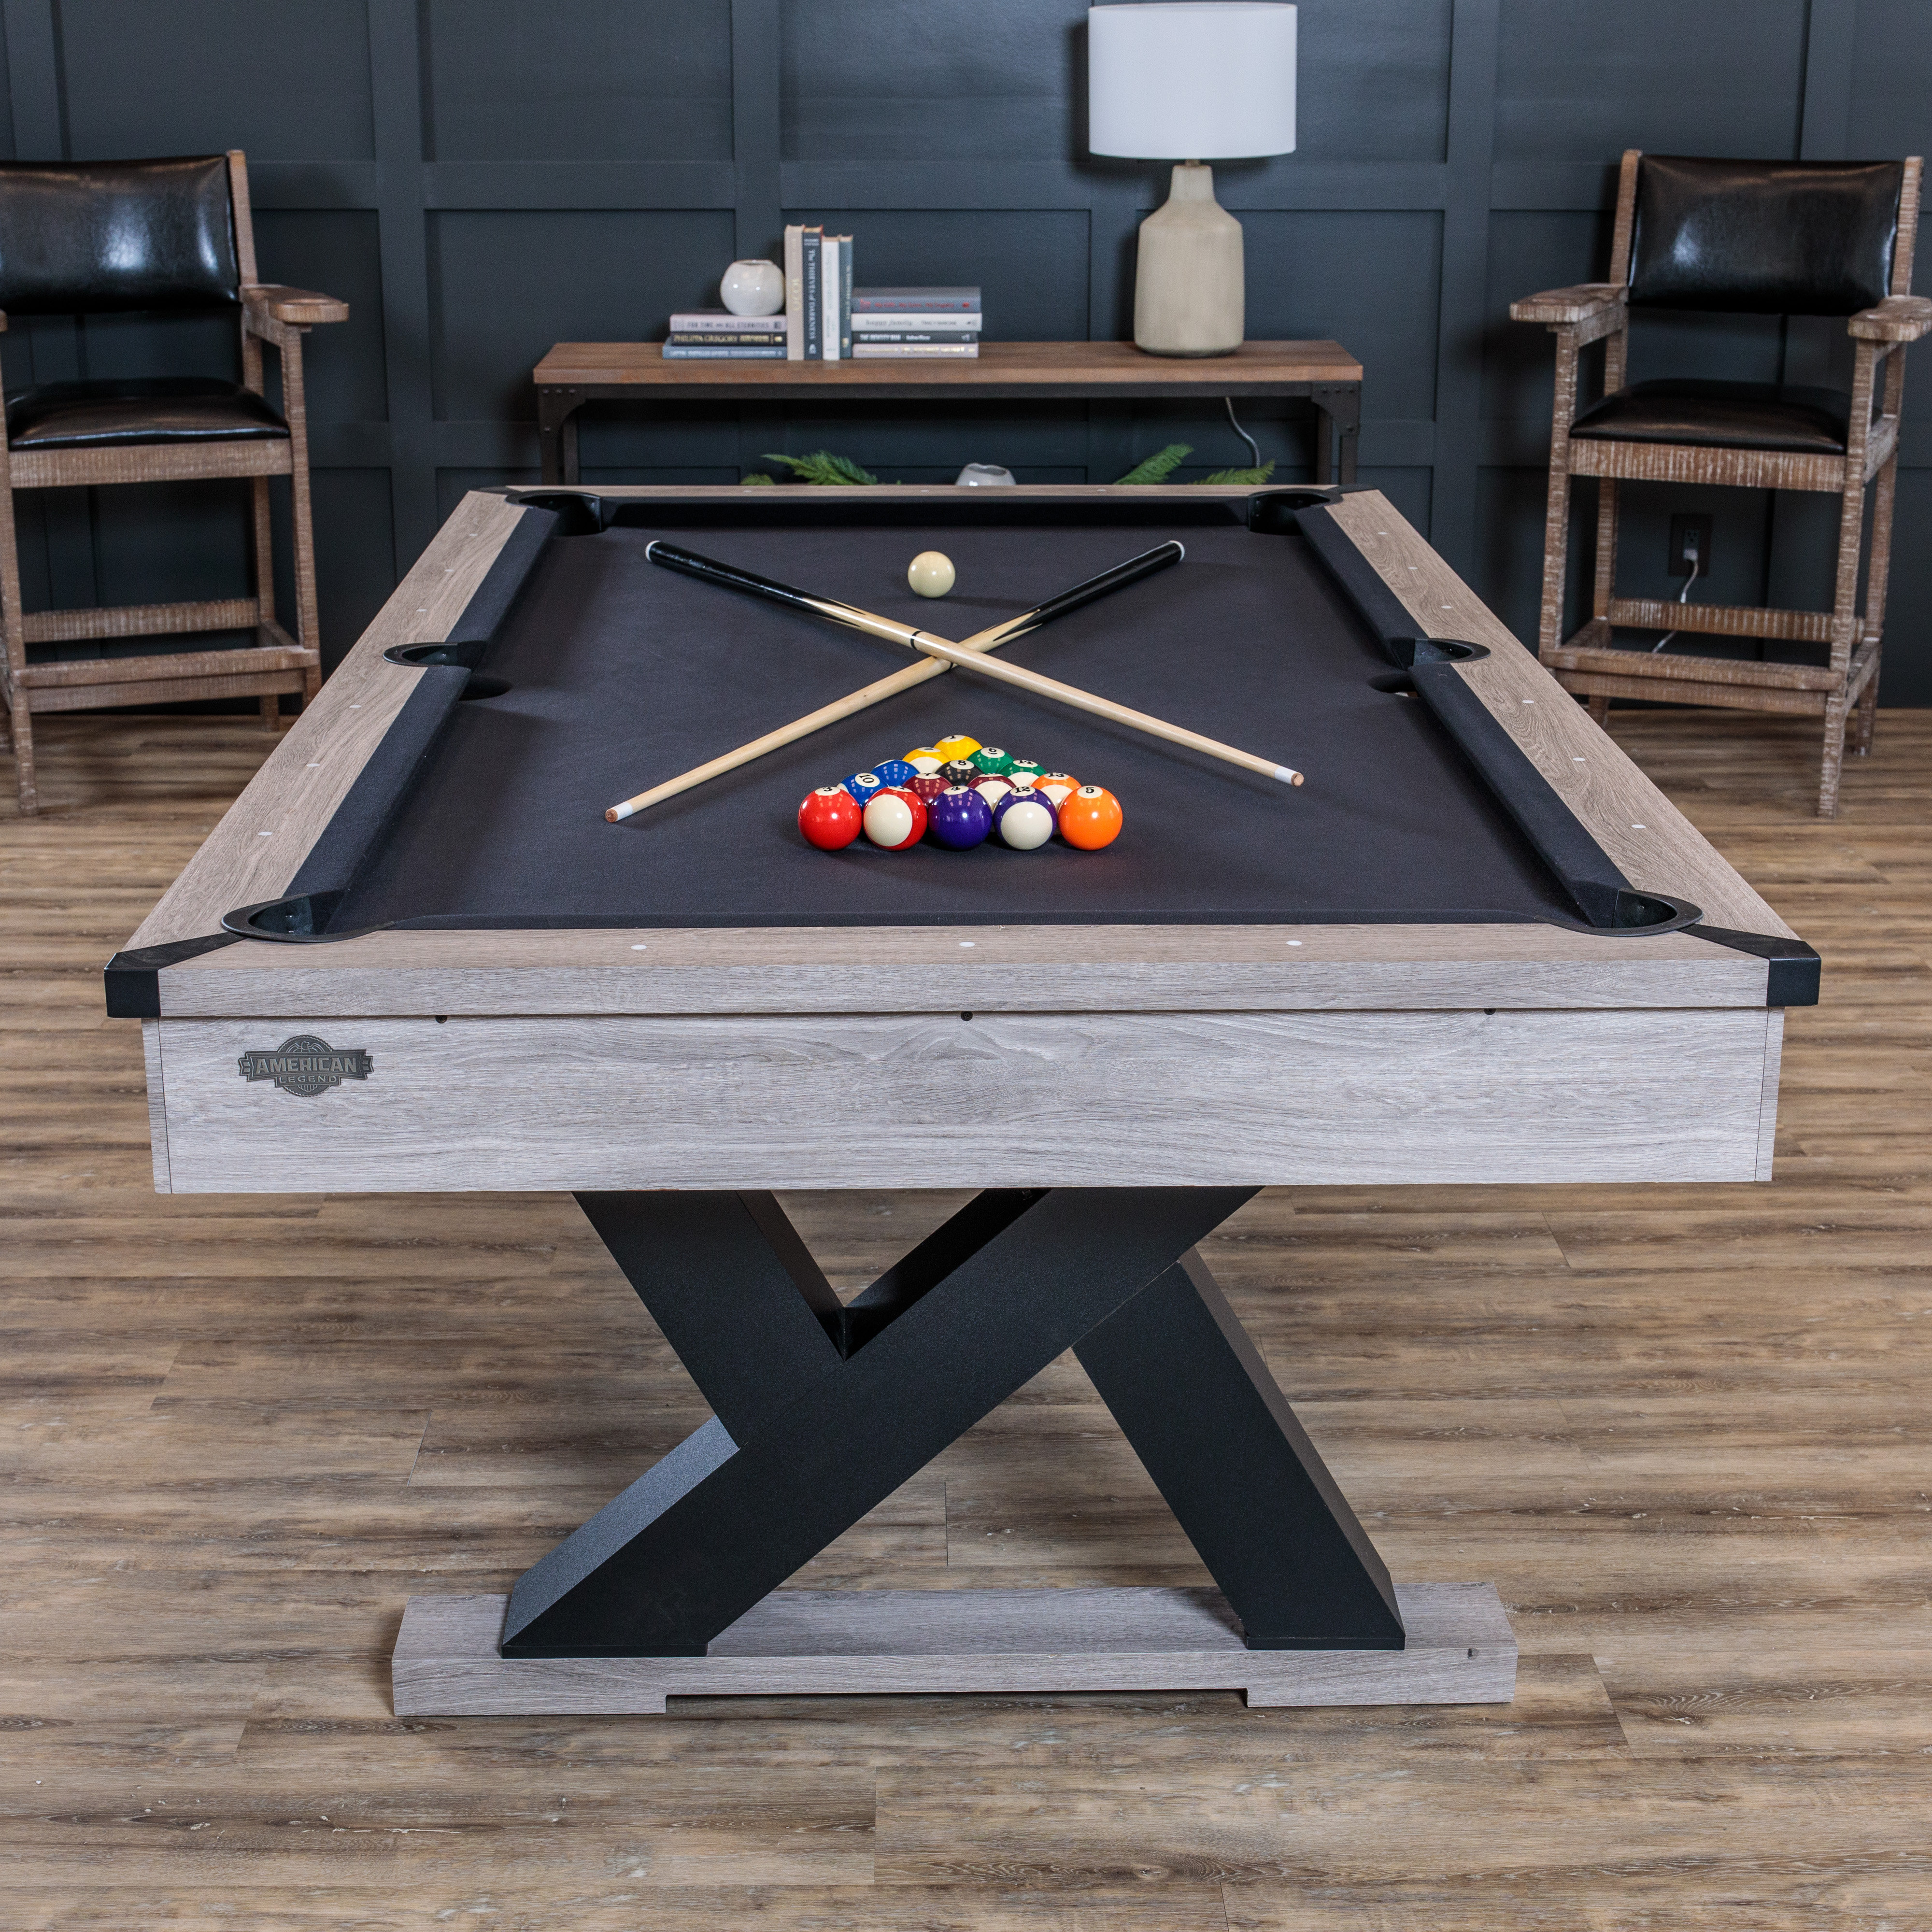 Kirkwood Pool Table - Rustic, Modern Design